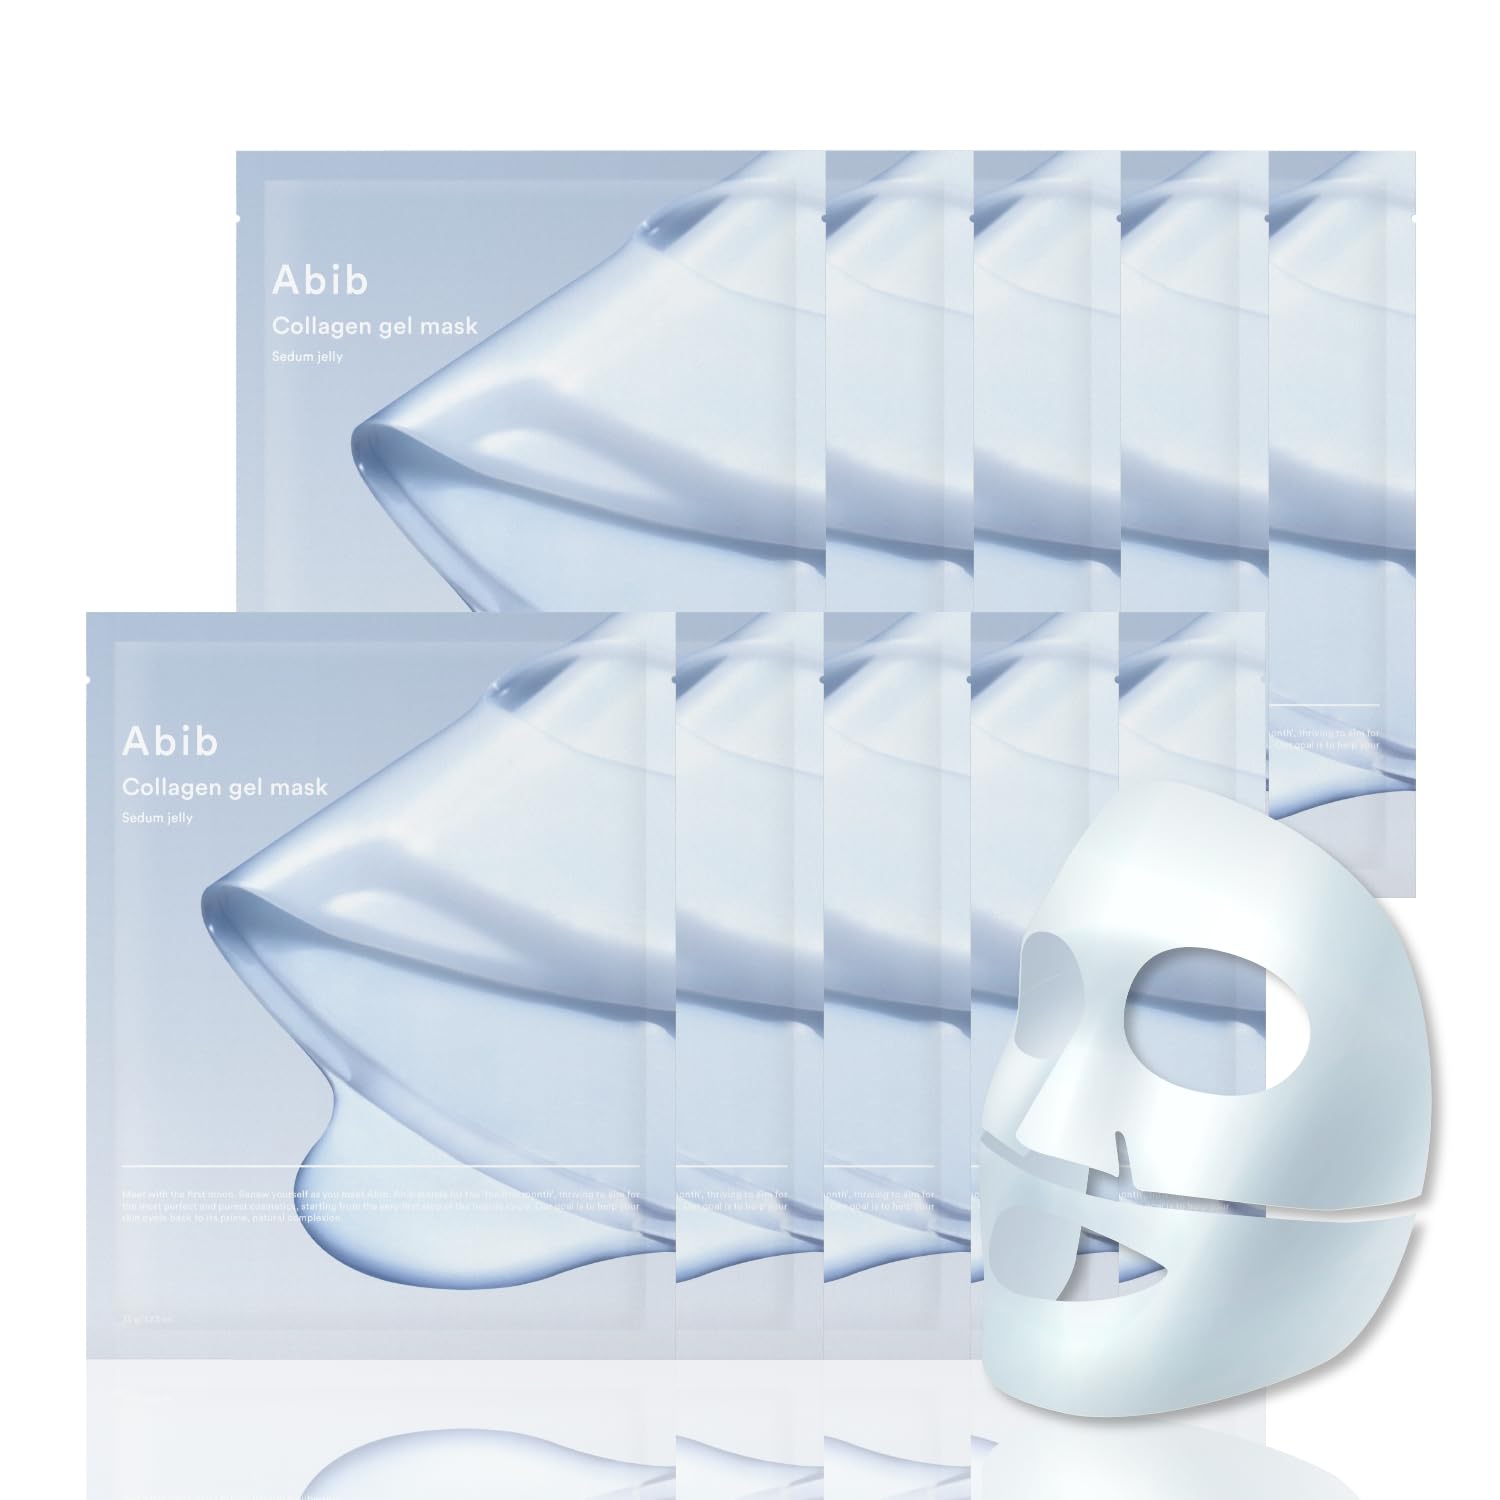 Abib Collagen Gel Mask Sedum Jelly 10 Sheets I Vegan Collagen, Hydrating Hyaluronic Acid Hydrogel Facial Mask